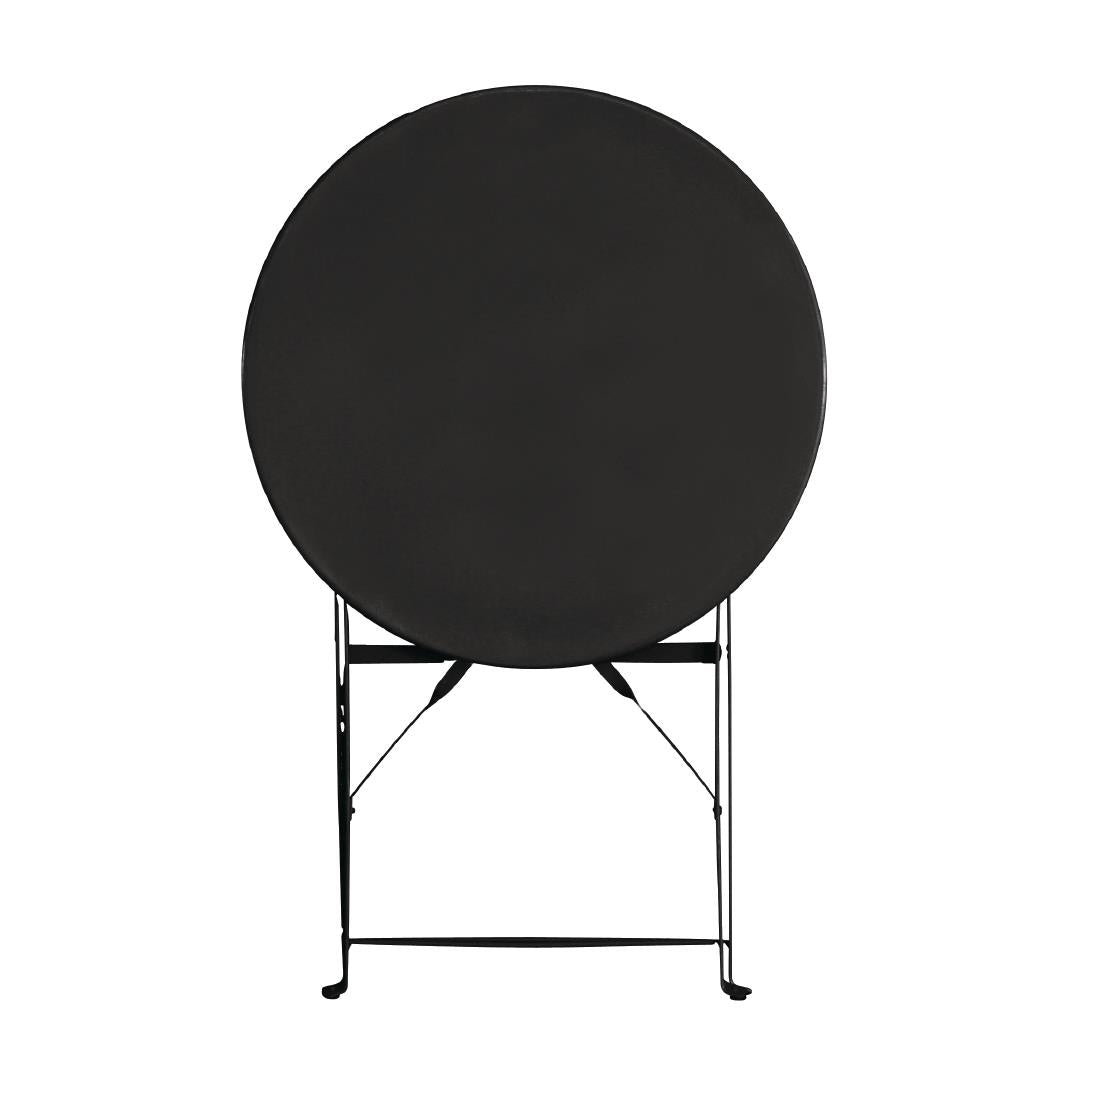 Bolero Black Pavement Style Steel Table 595mm JD Catering Equipment Solutions Ltd